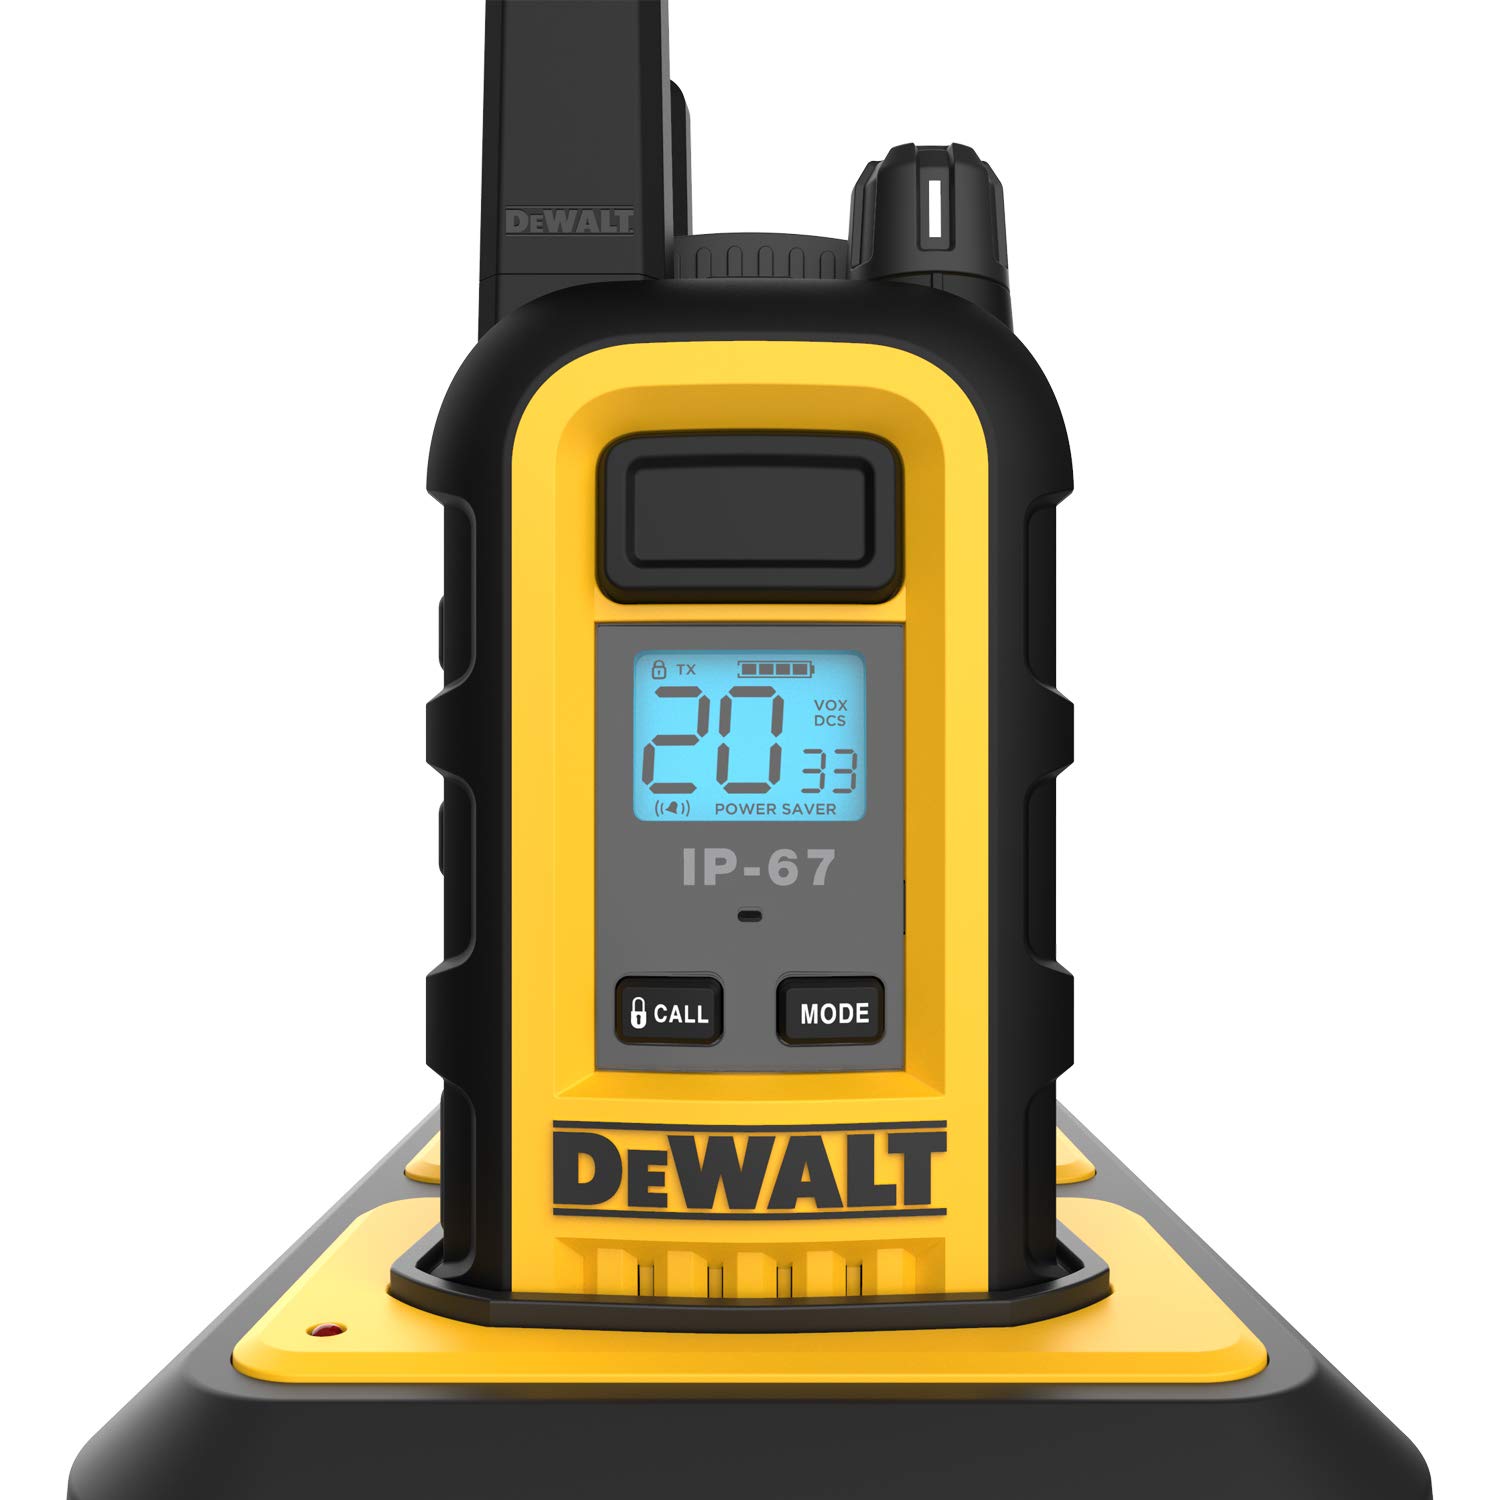 DEWALT DXFRS300 1 Watt Heavy Duty Walkie Talkies - Waterproof, Shock Resistant, Long Range & Rechargeable Two-Way Radio with VOX (6 Pack w/ Gang Charger) (DXFRS300-BCH6)